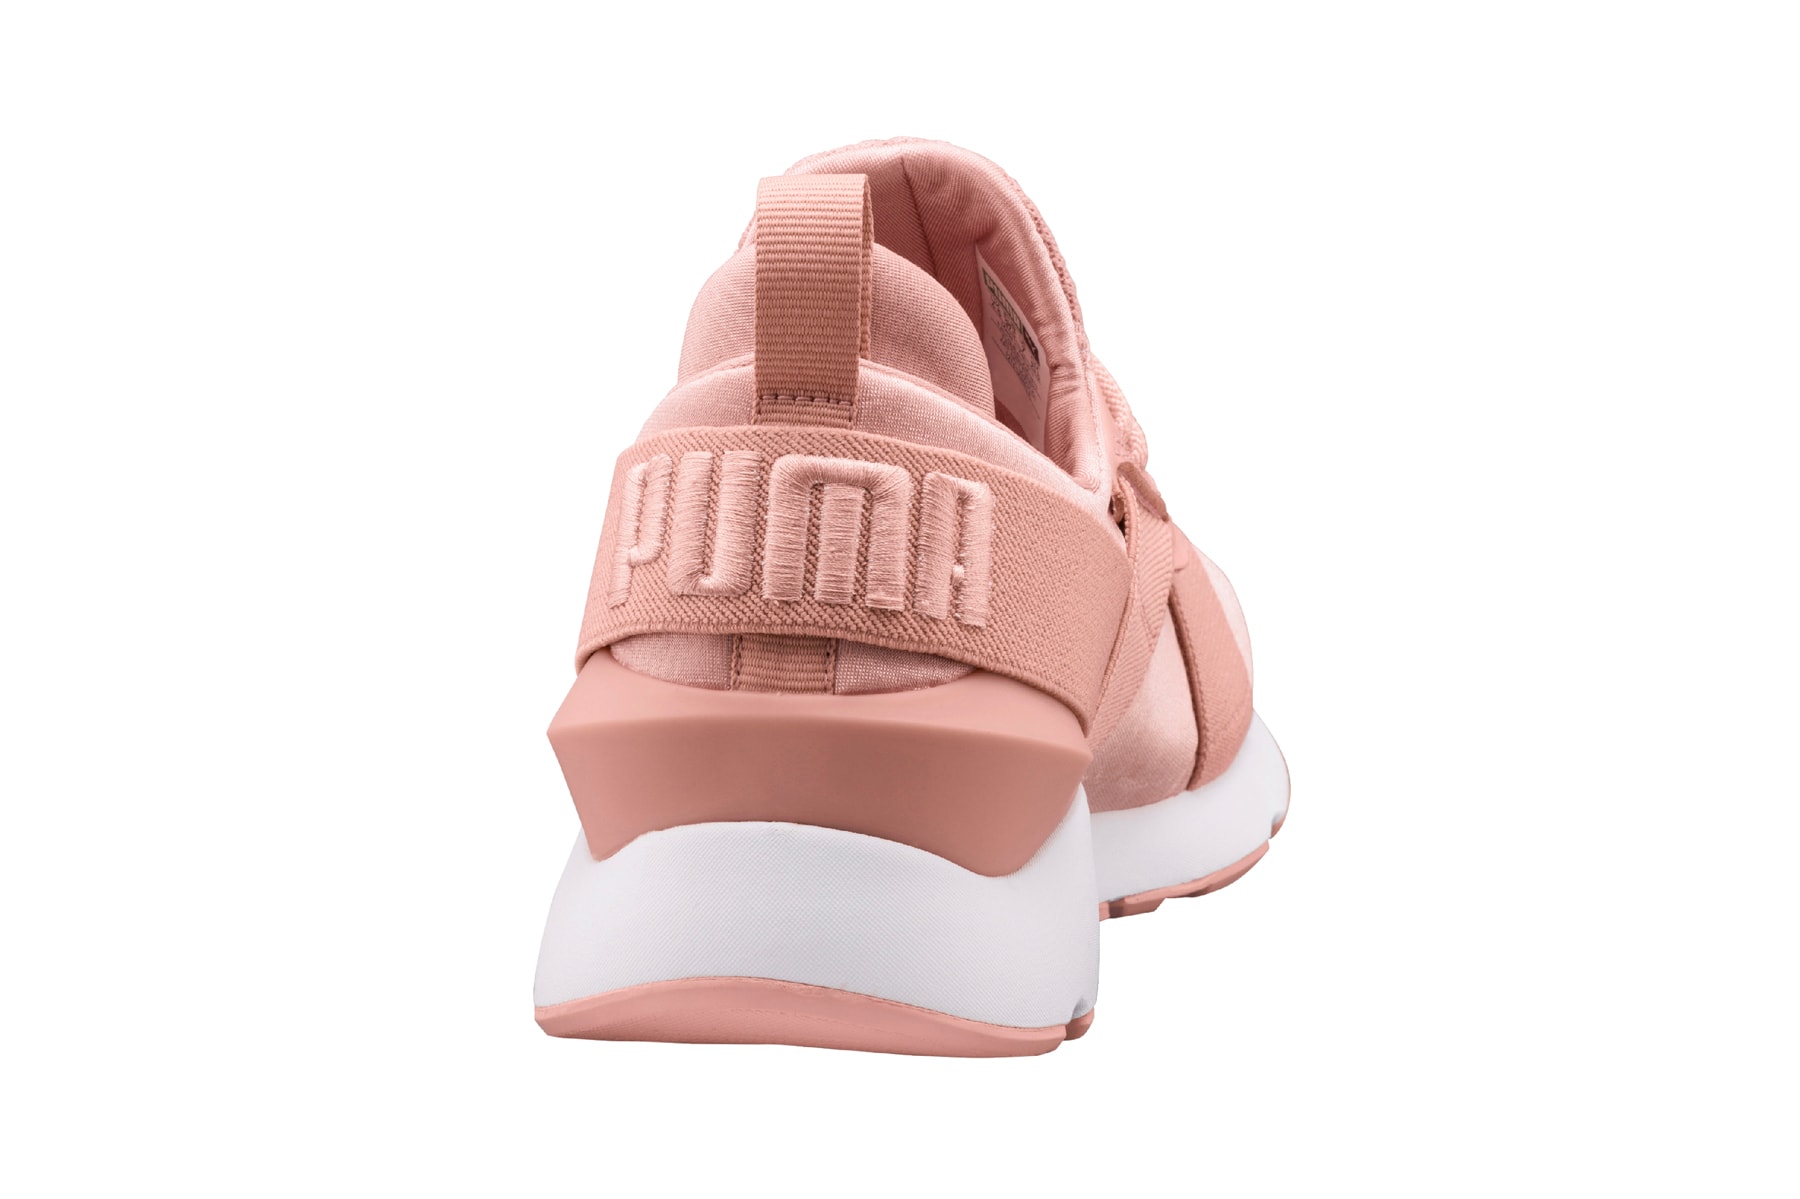 Cara Delevingne PUMA Ambassador Muse X Strap Campaign Sneaker Pink Peach Print Ad Do You